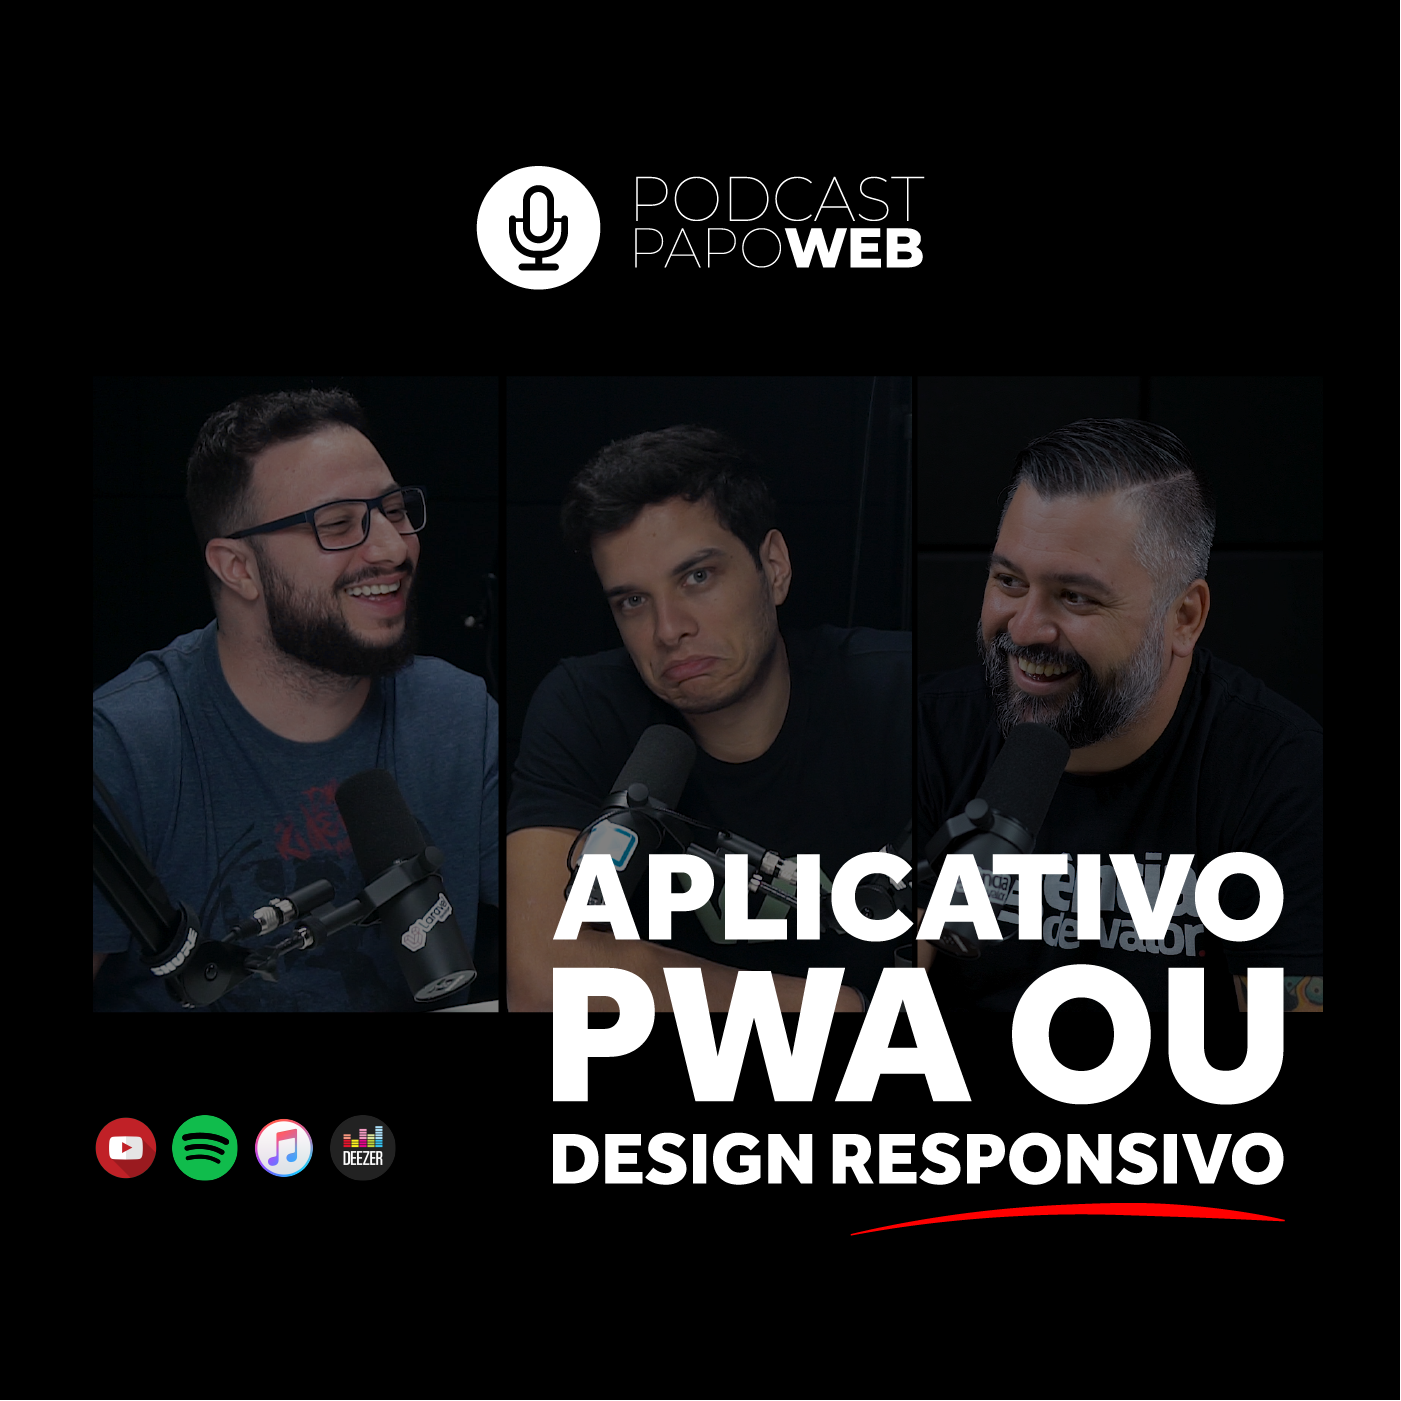 Aplicativo, PWA ou Design Responsivo | Podcast Papo Web #047